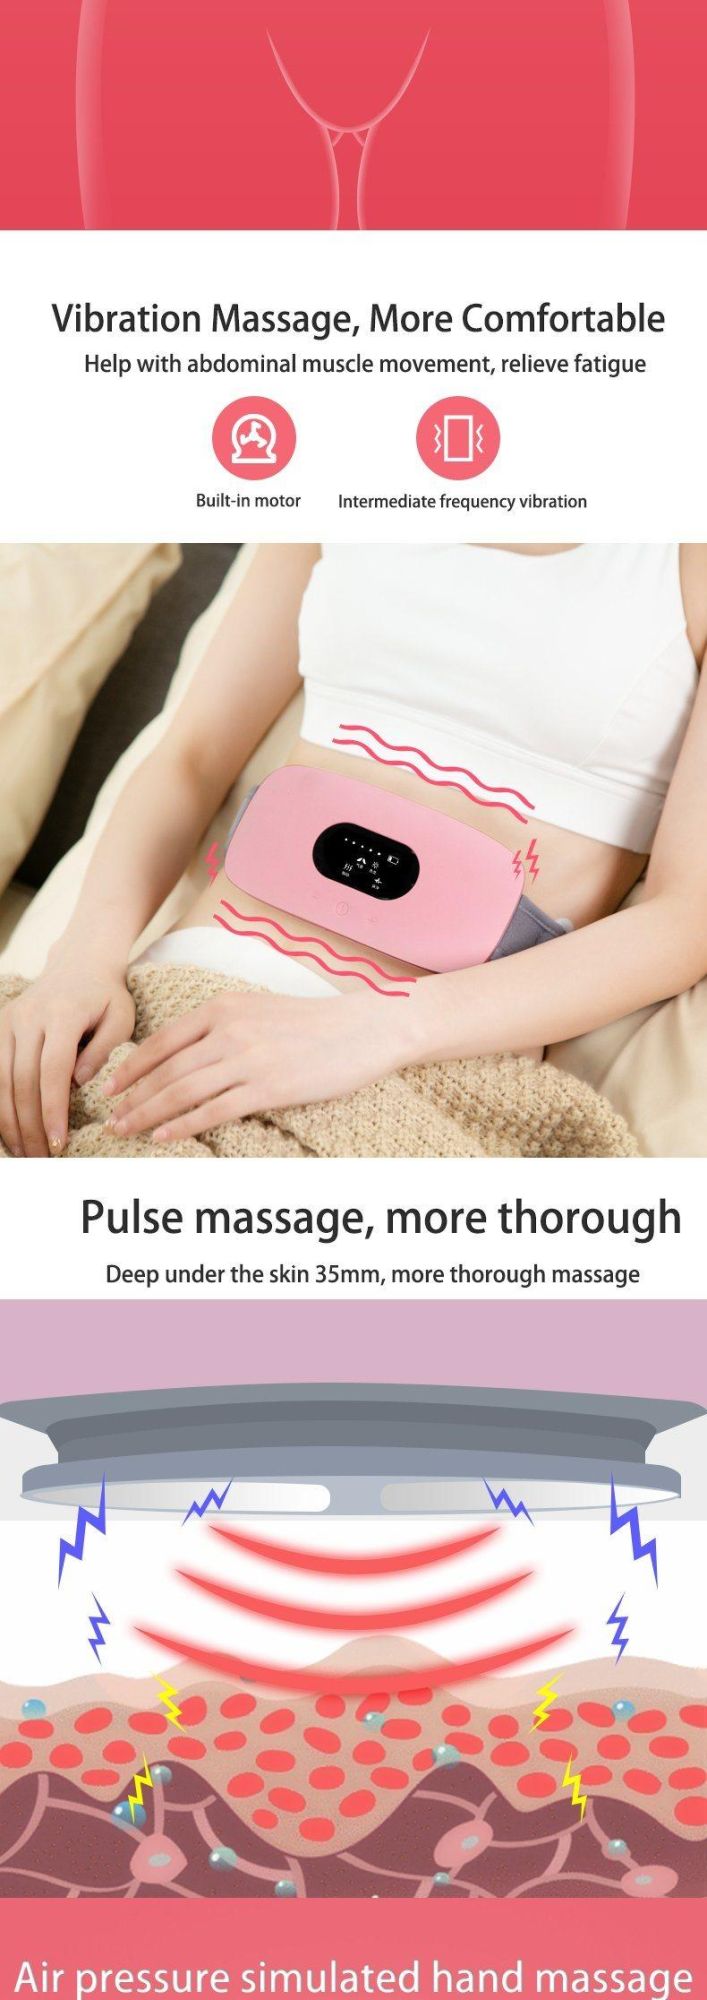 Hezheng Belly Massager Electric Warm Therapy Uterus Warm Belt Belly Belt